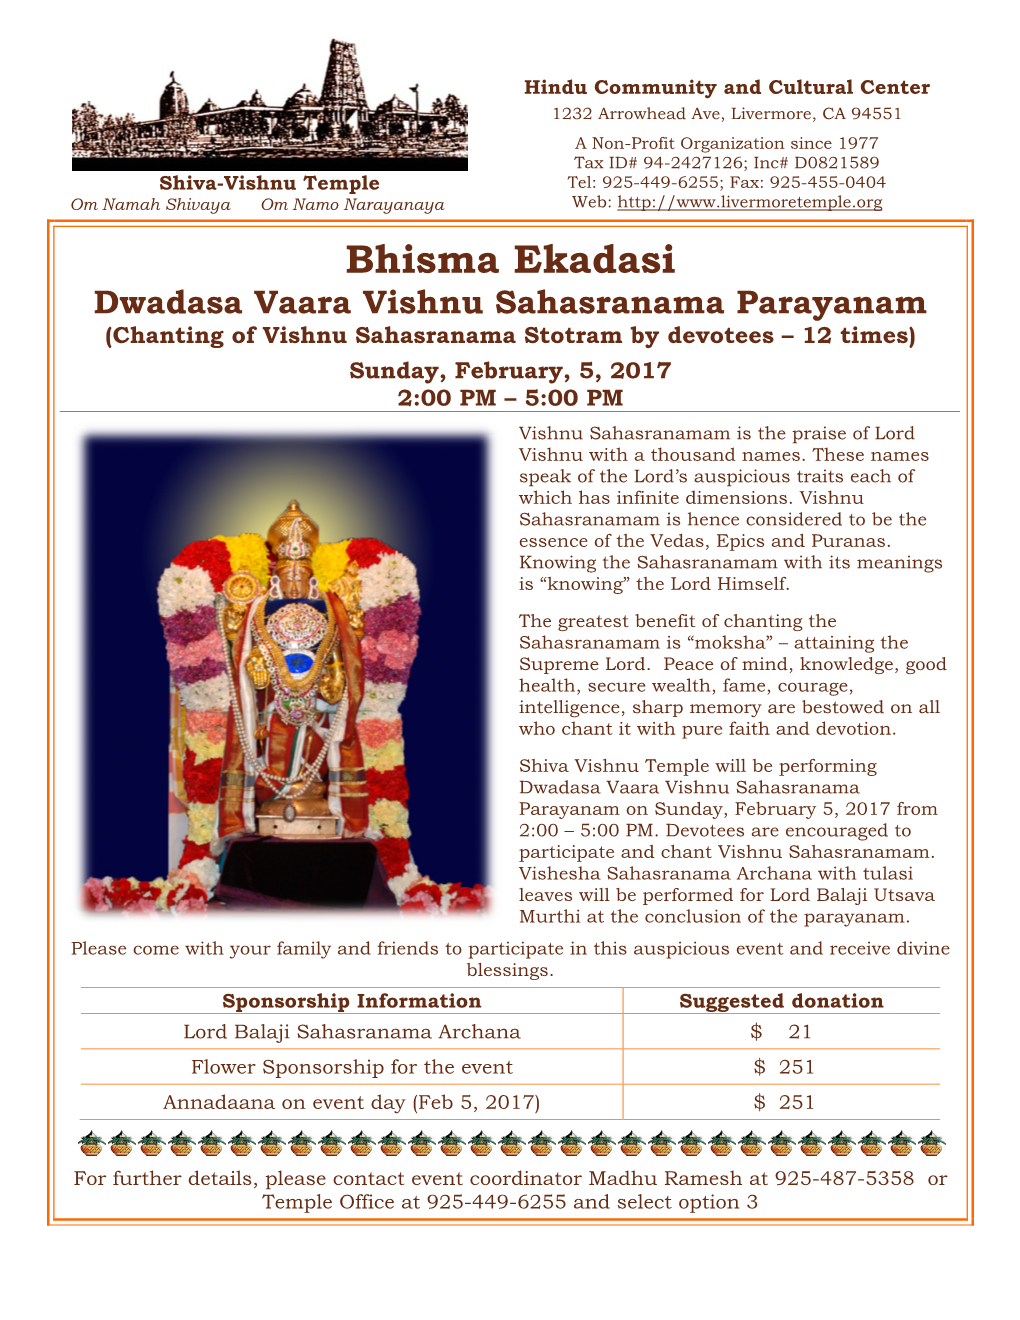 Bhisma Ekadasi Dwadasa Vaara Vishnu Sahasranama Parayanam (Chanting of Vishnu Sahasranama Stotram by Devotees – 12 Times)